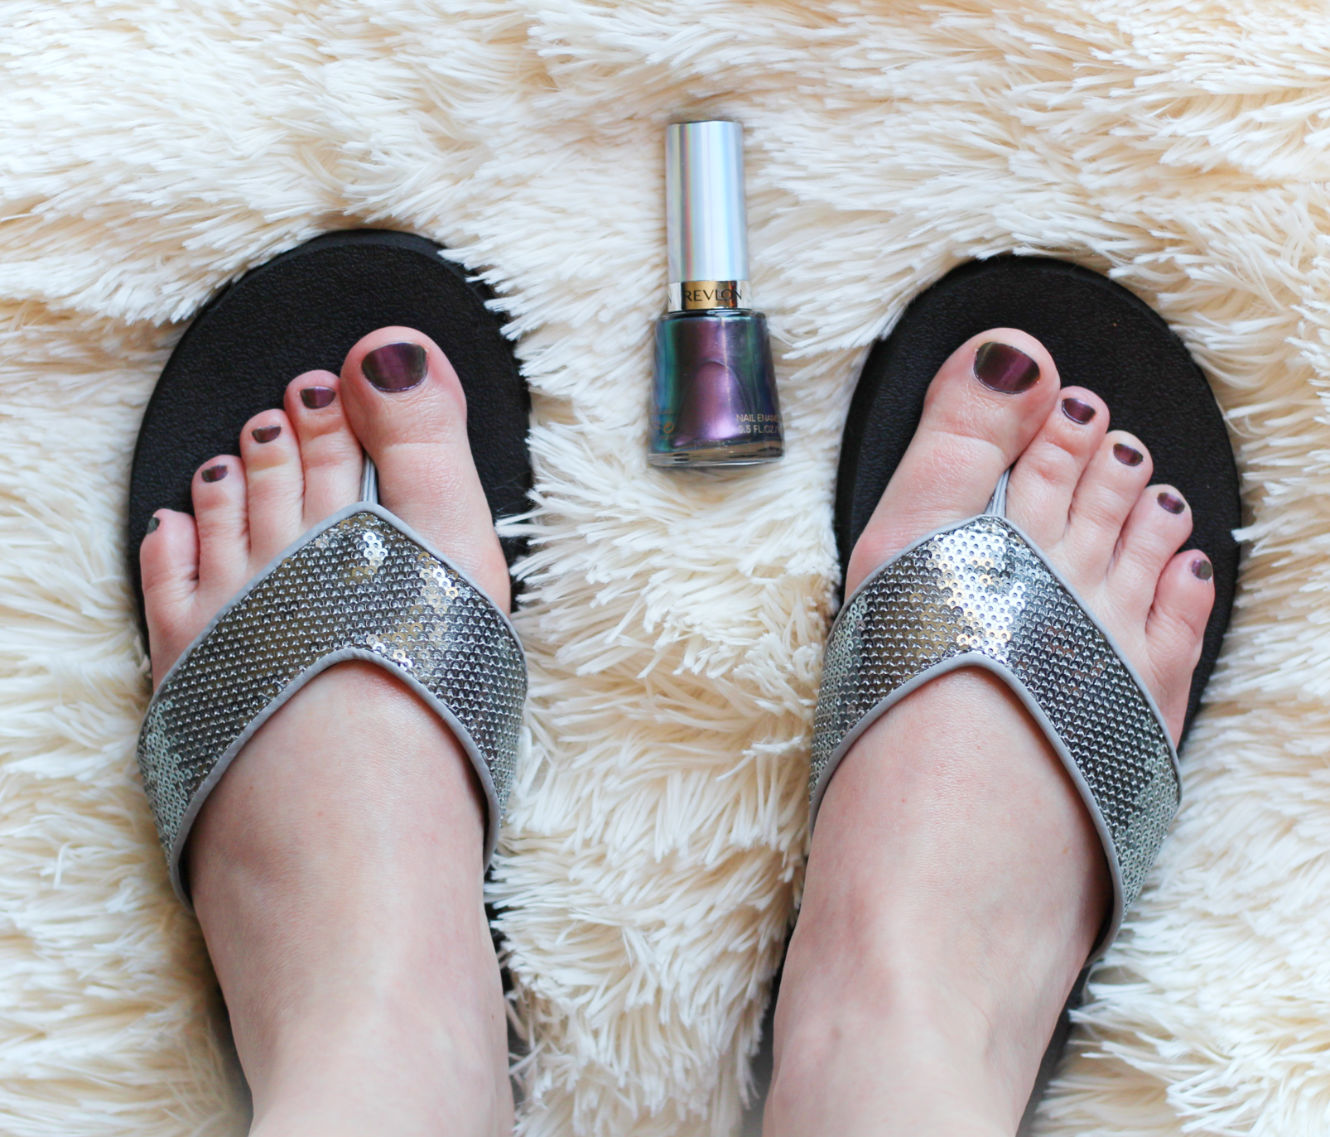 Summer Sandals Plus A New Favorite Nail Polish #beauty #fashion